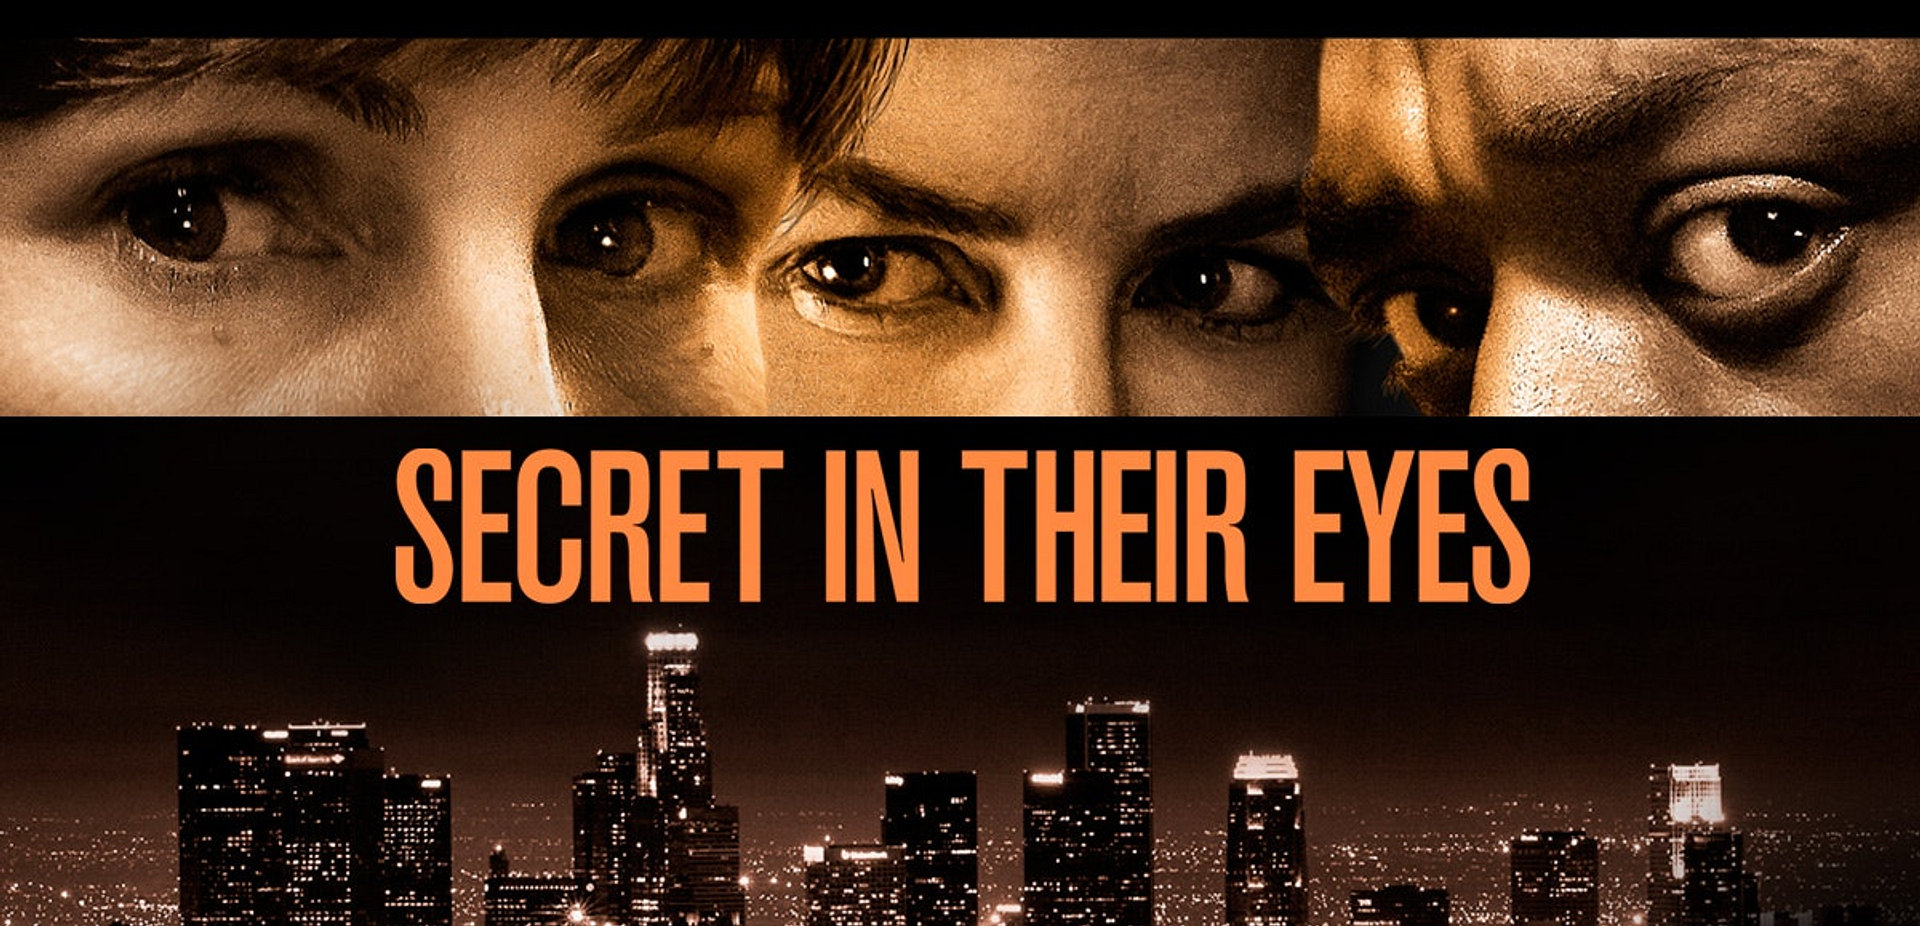 Secret in their eyes